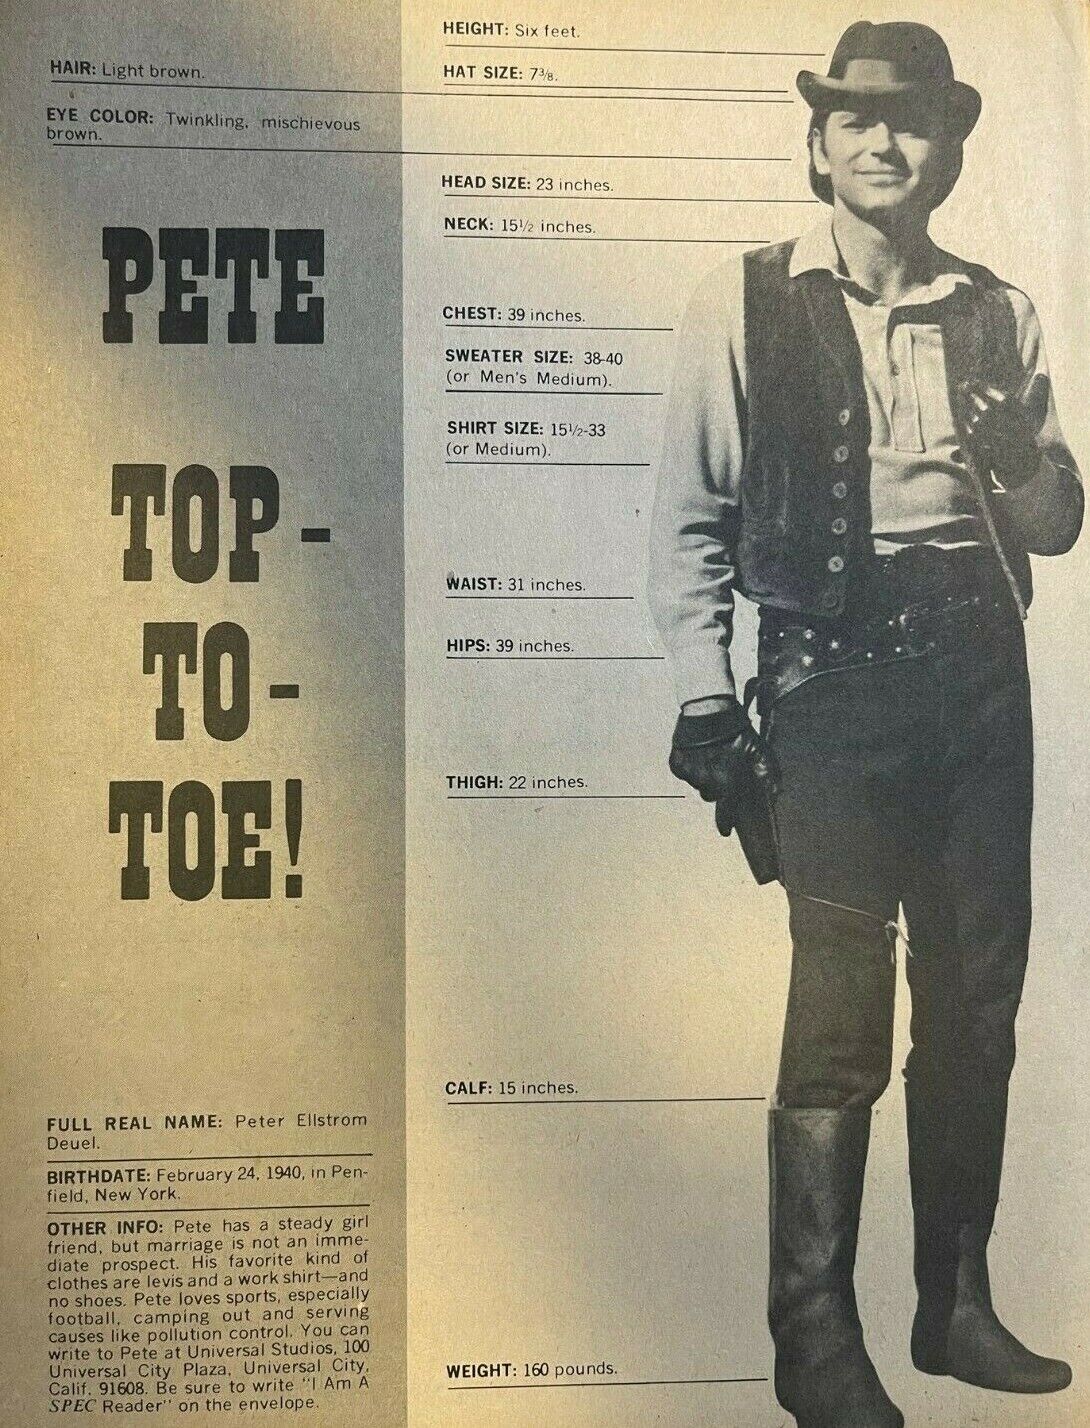 1971 Actor Pete Duel Alias Smith & Jones